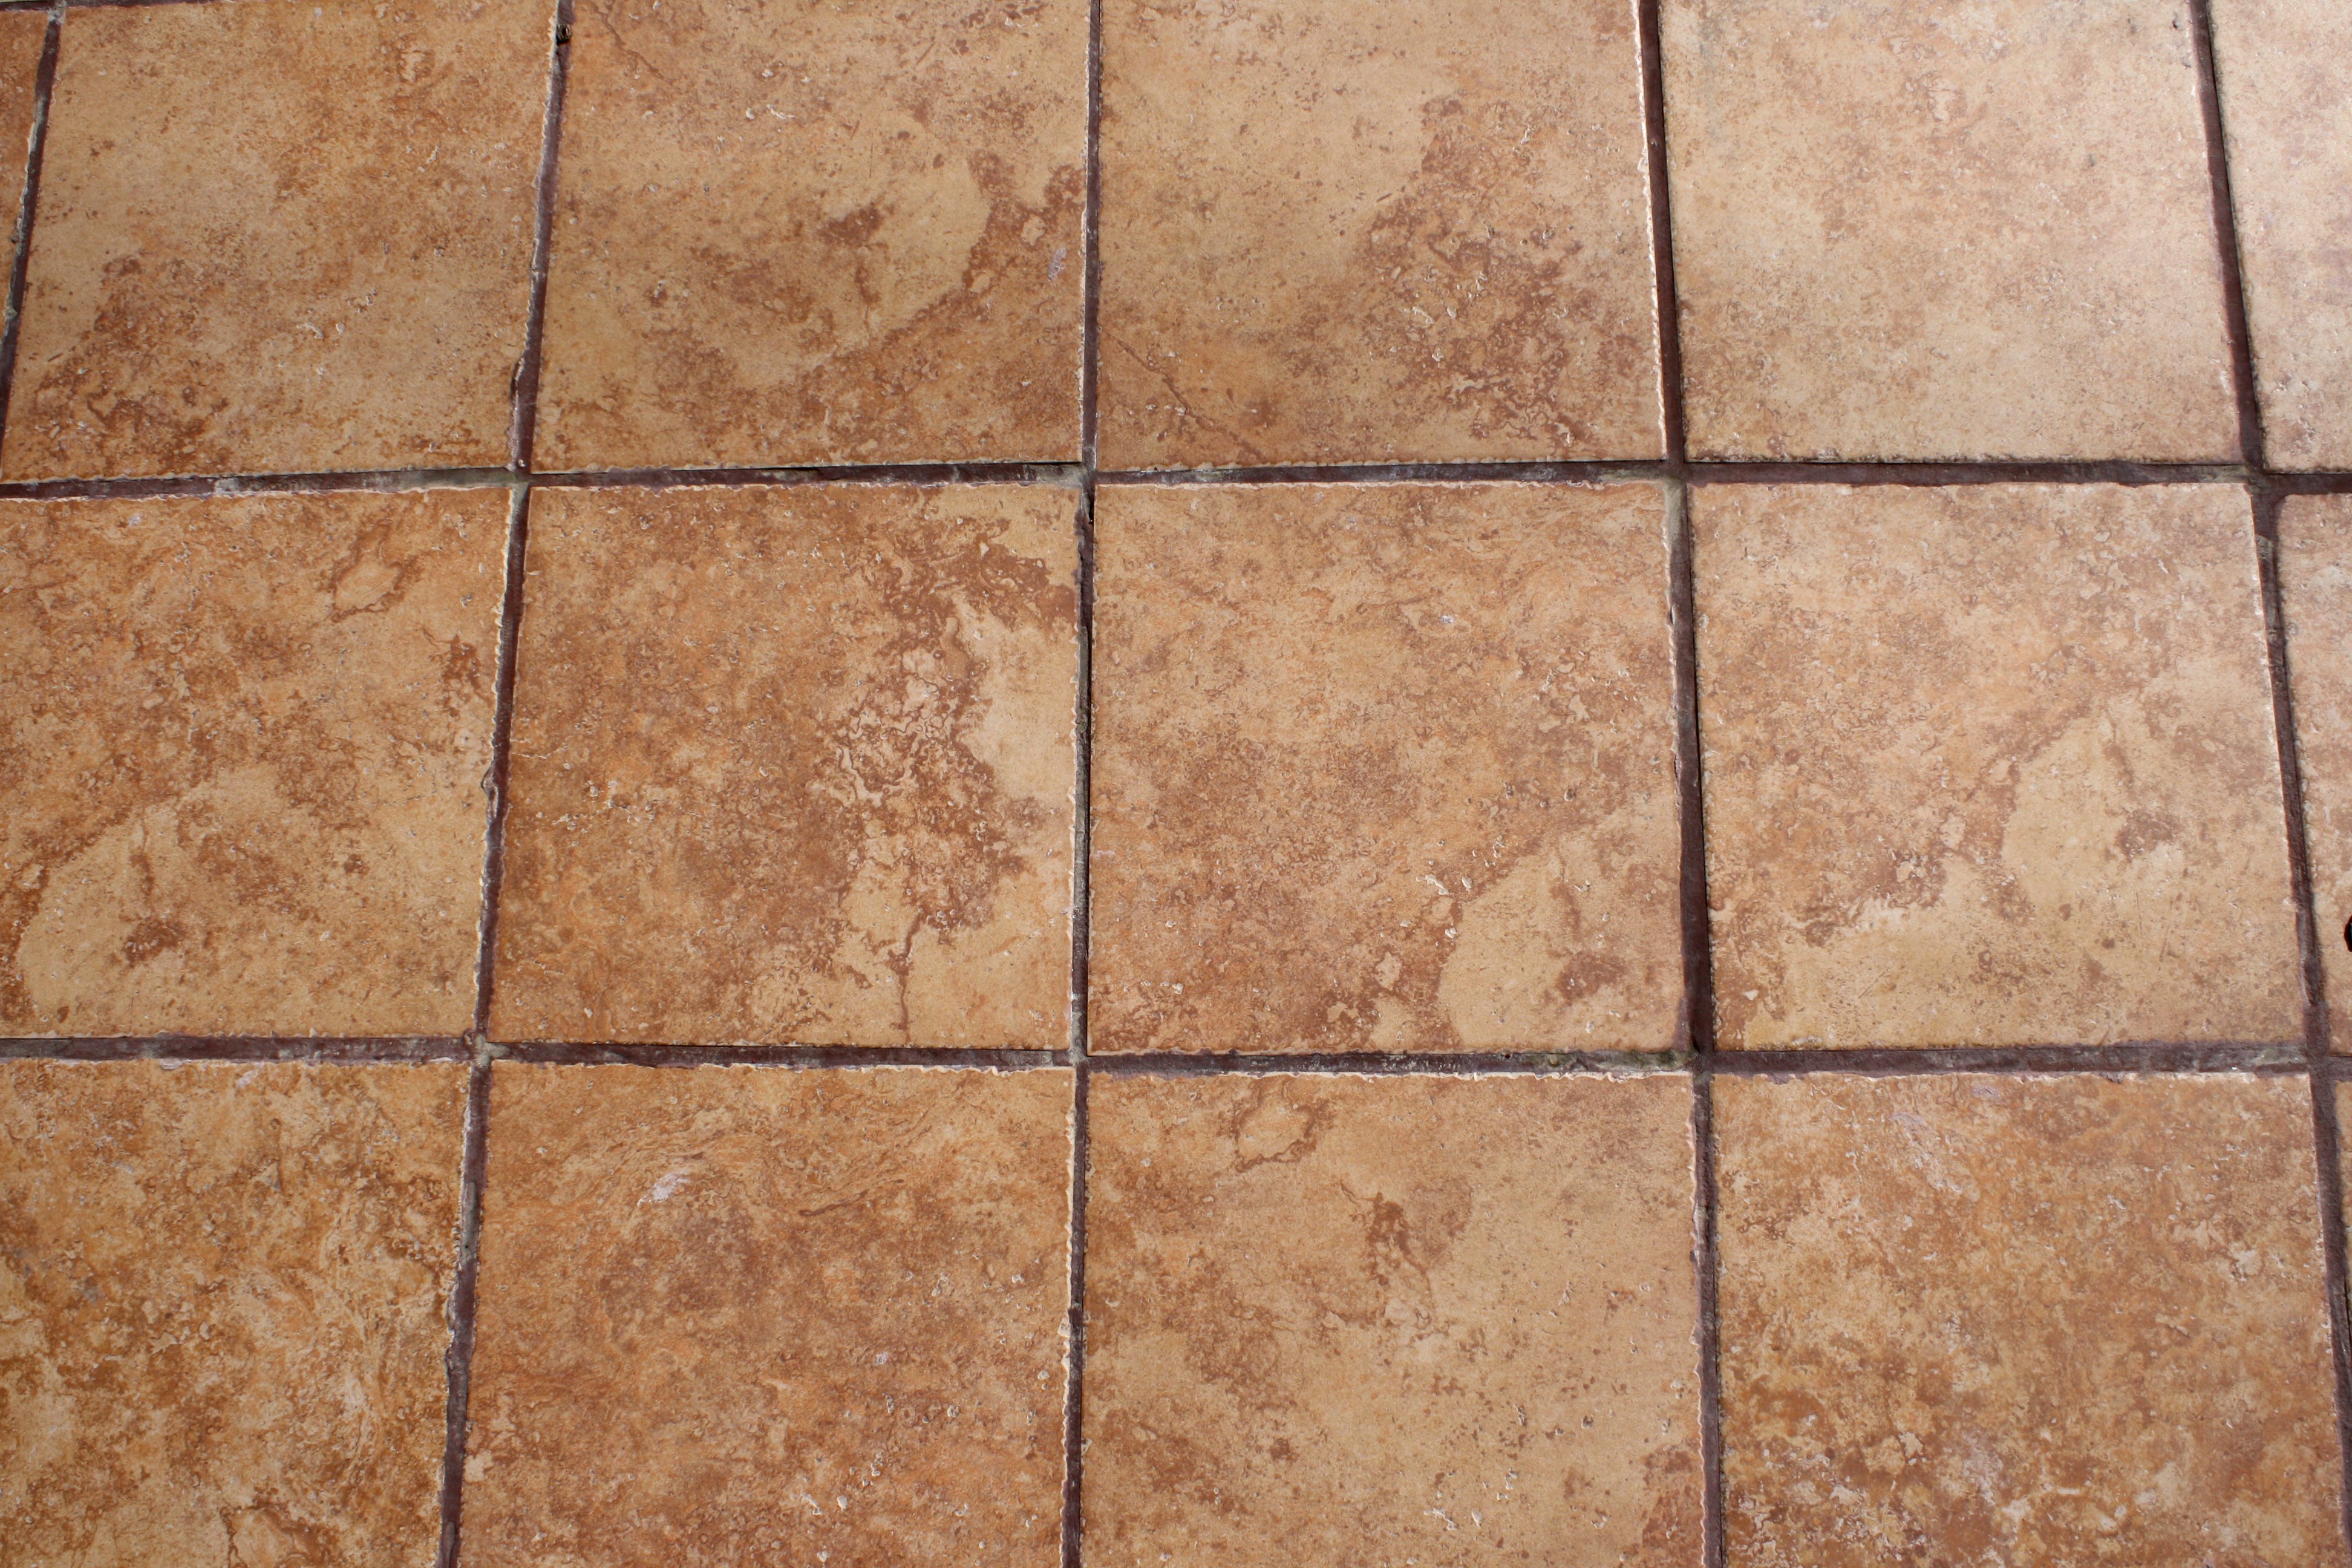 Light Brown Floor Tiles Texture Picture | Free Photograph | Photos ...